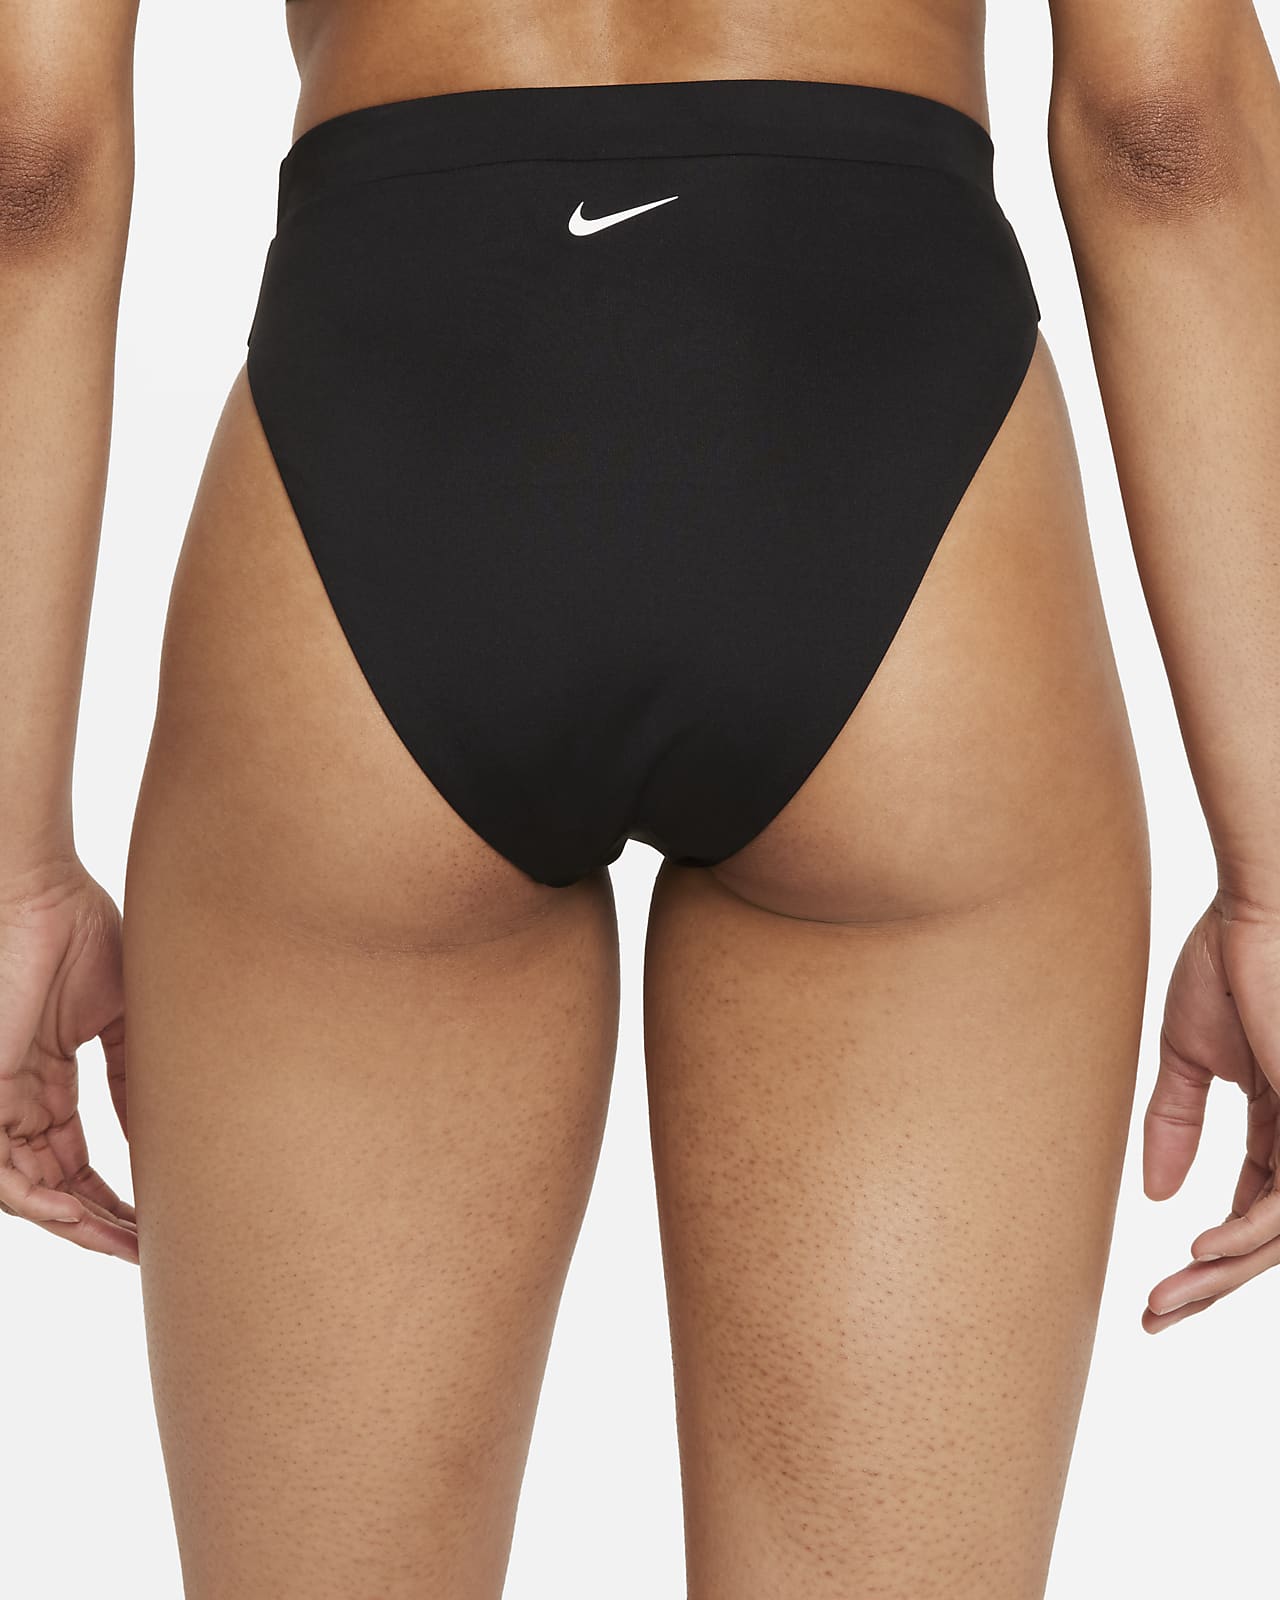 Nike Swimming reversible high waist cheeky bikini bottoms in black print